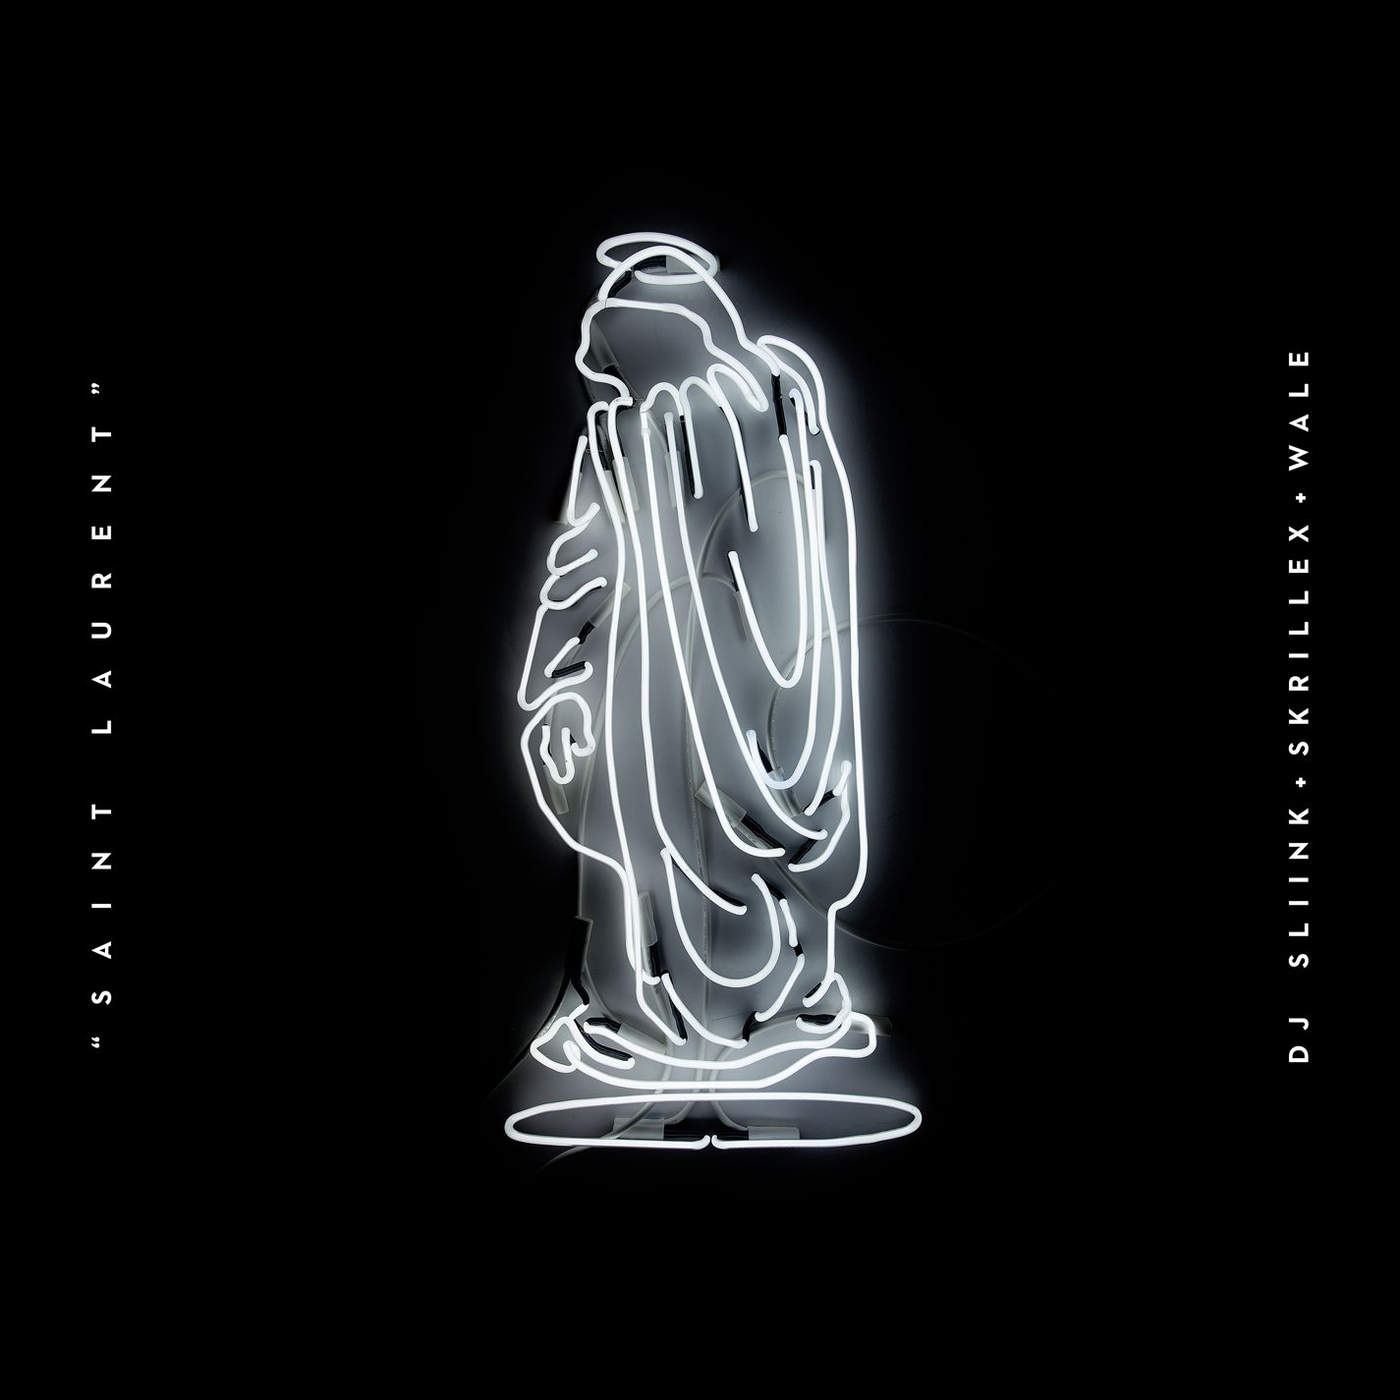 New Music: DJ Sliink – “Saint Laurent” Feat. Wale & Skrillex [LISTEN]